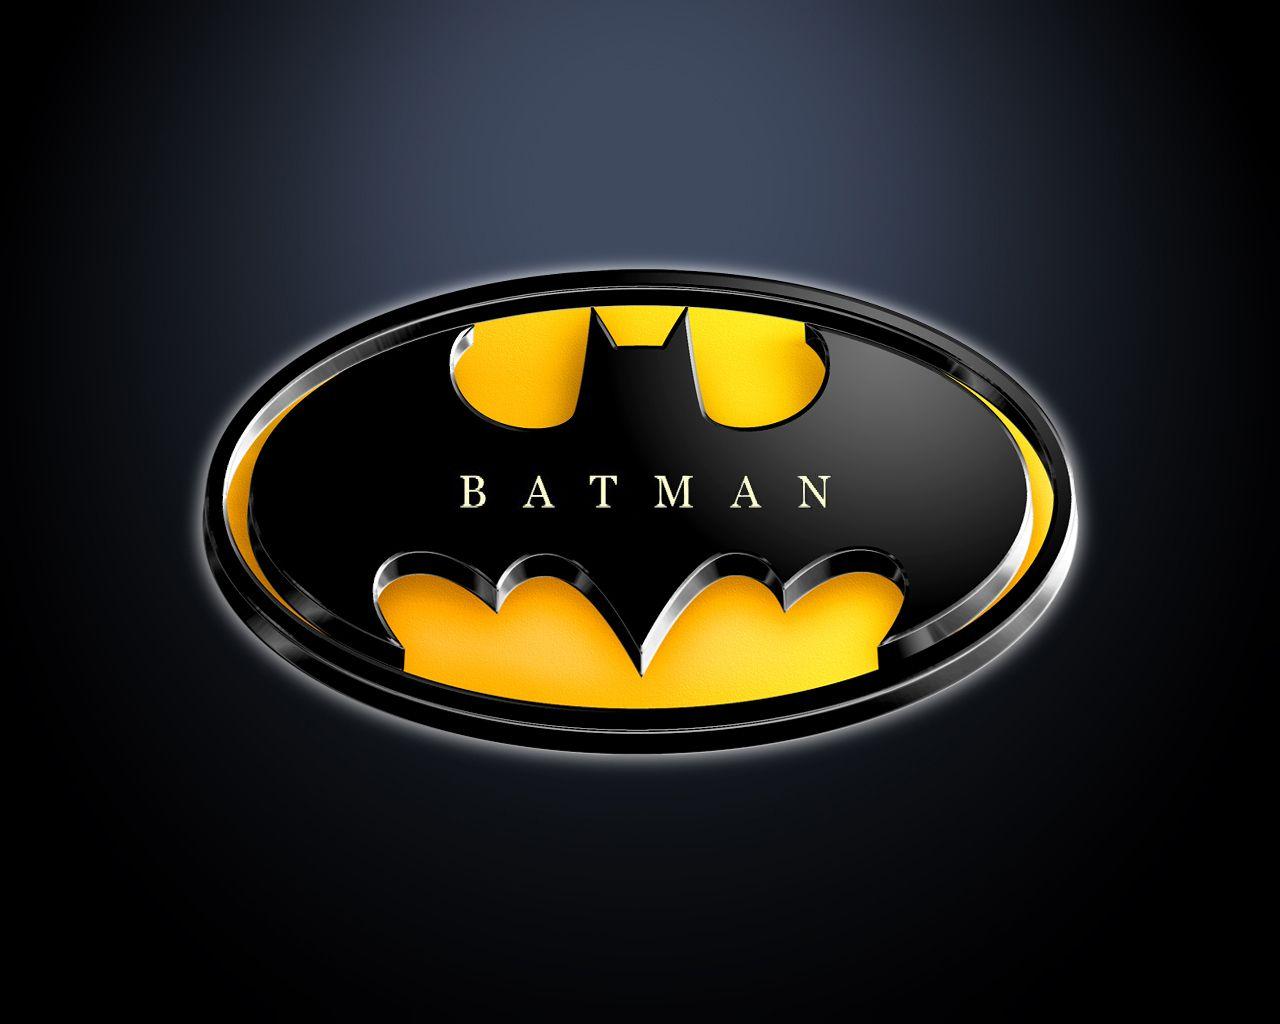 Batman 3D Desktop Wallpapers - Top Free